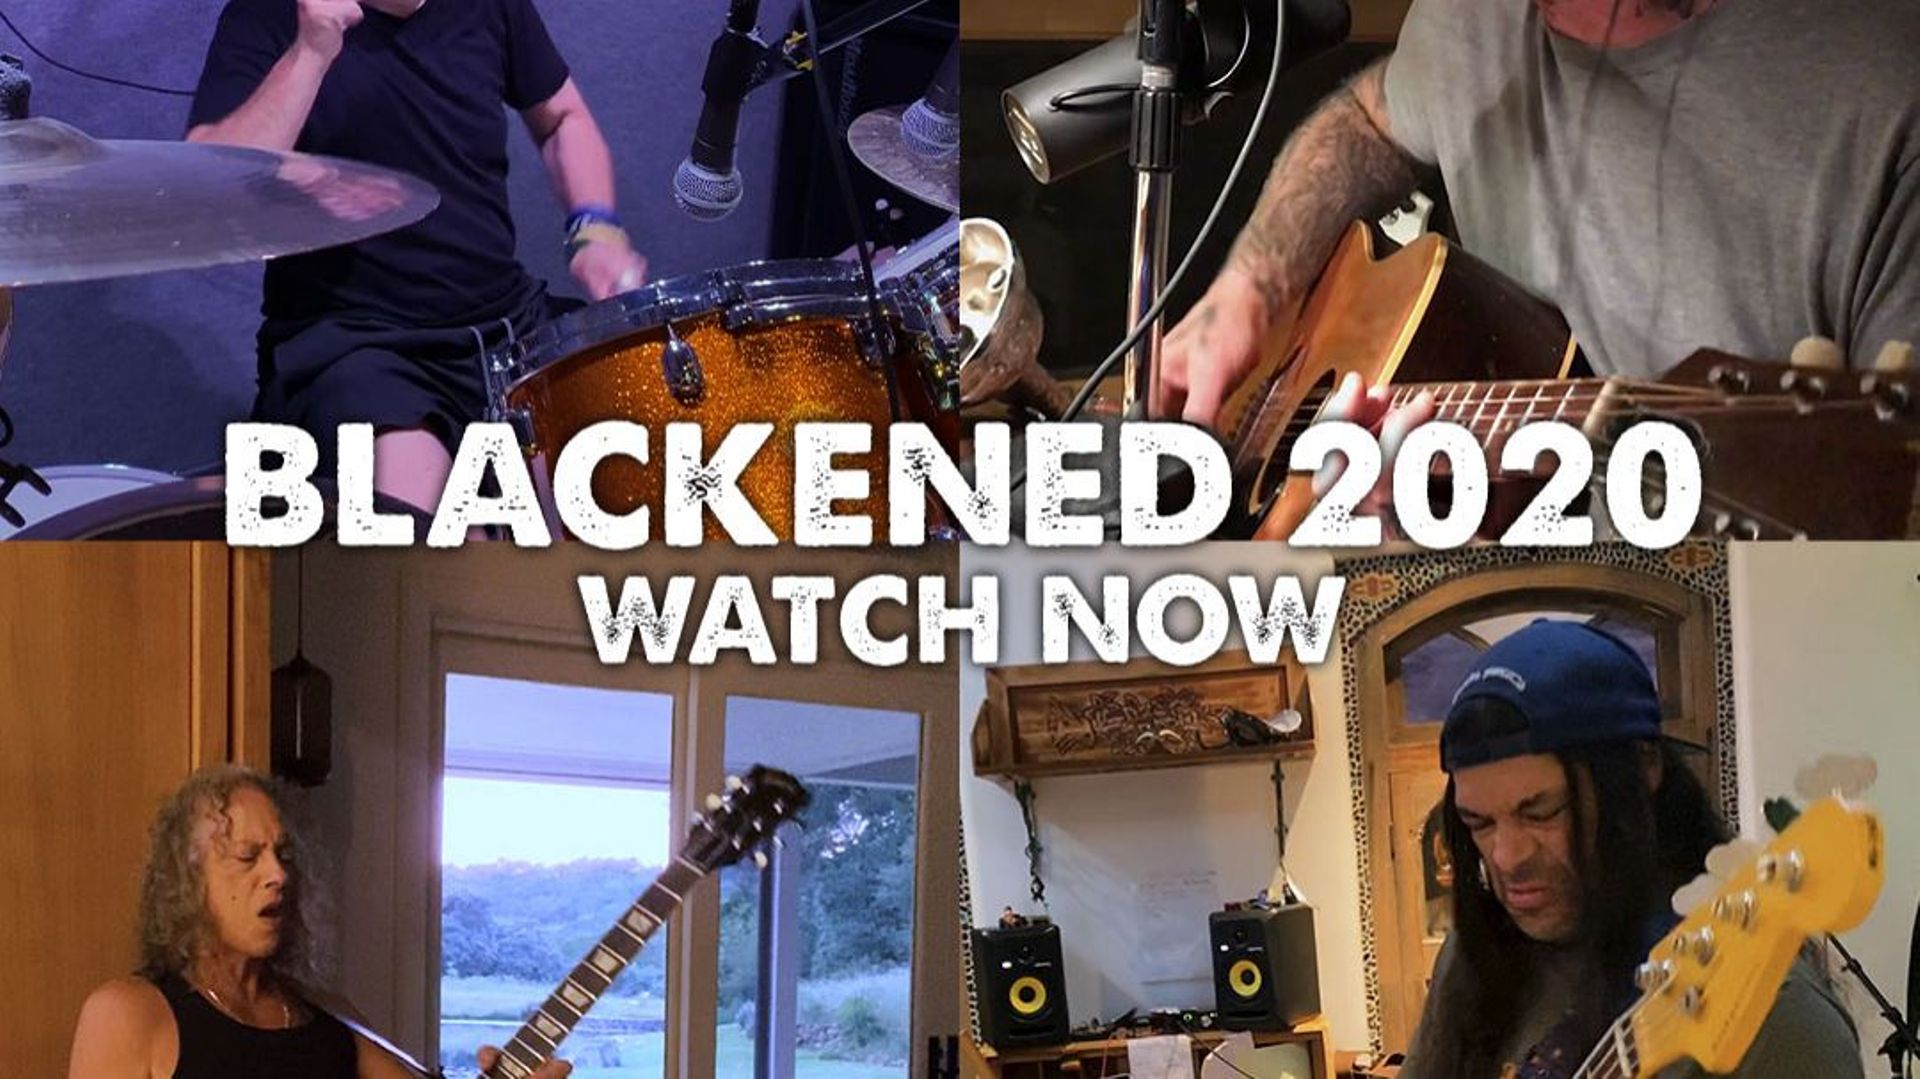 Metallica partage une version confinée de "Blackened" 